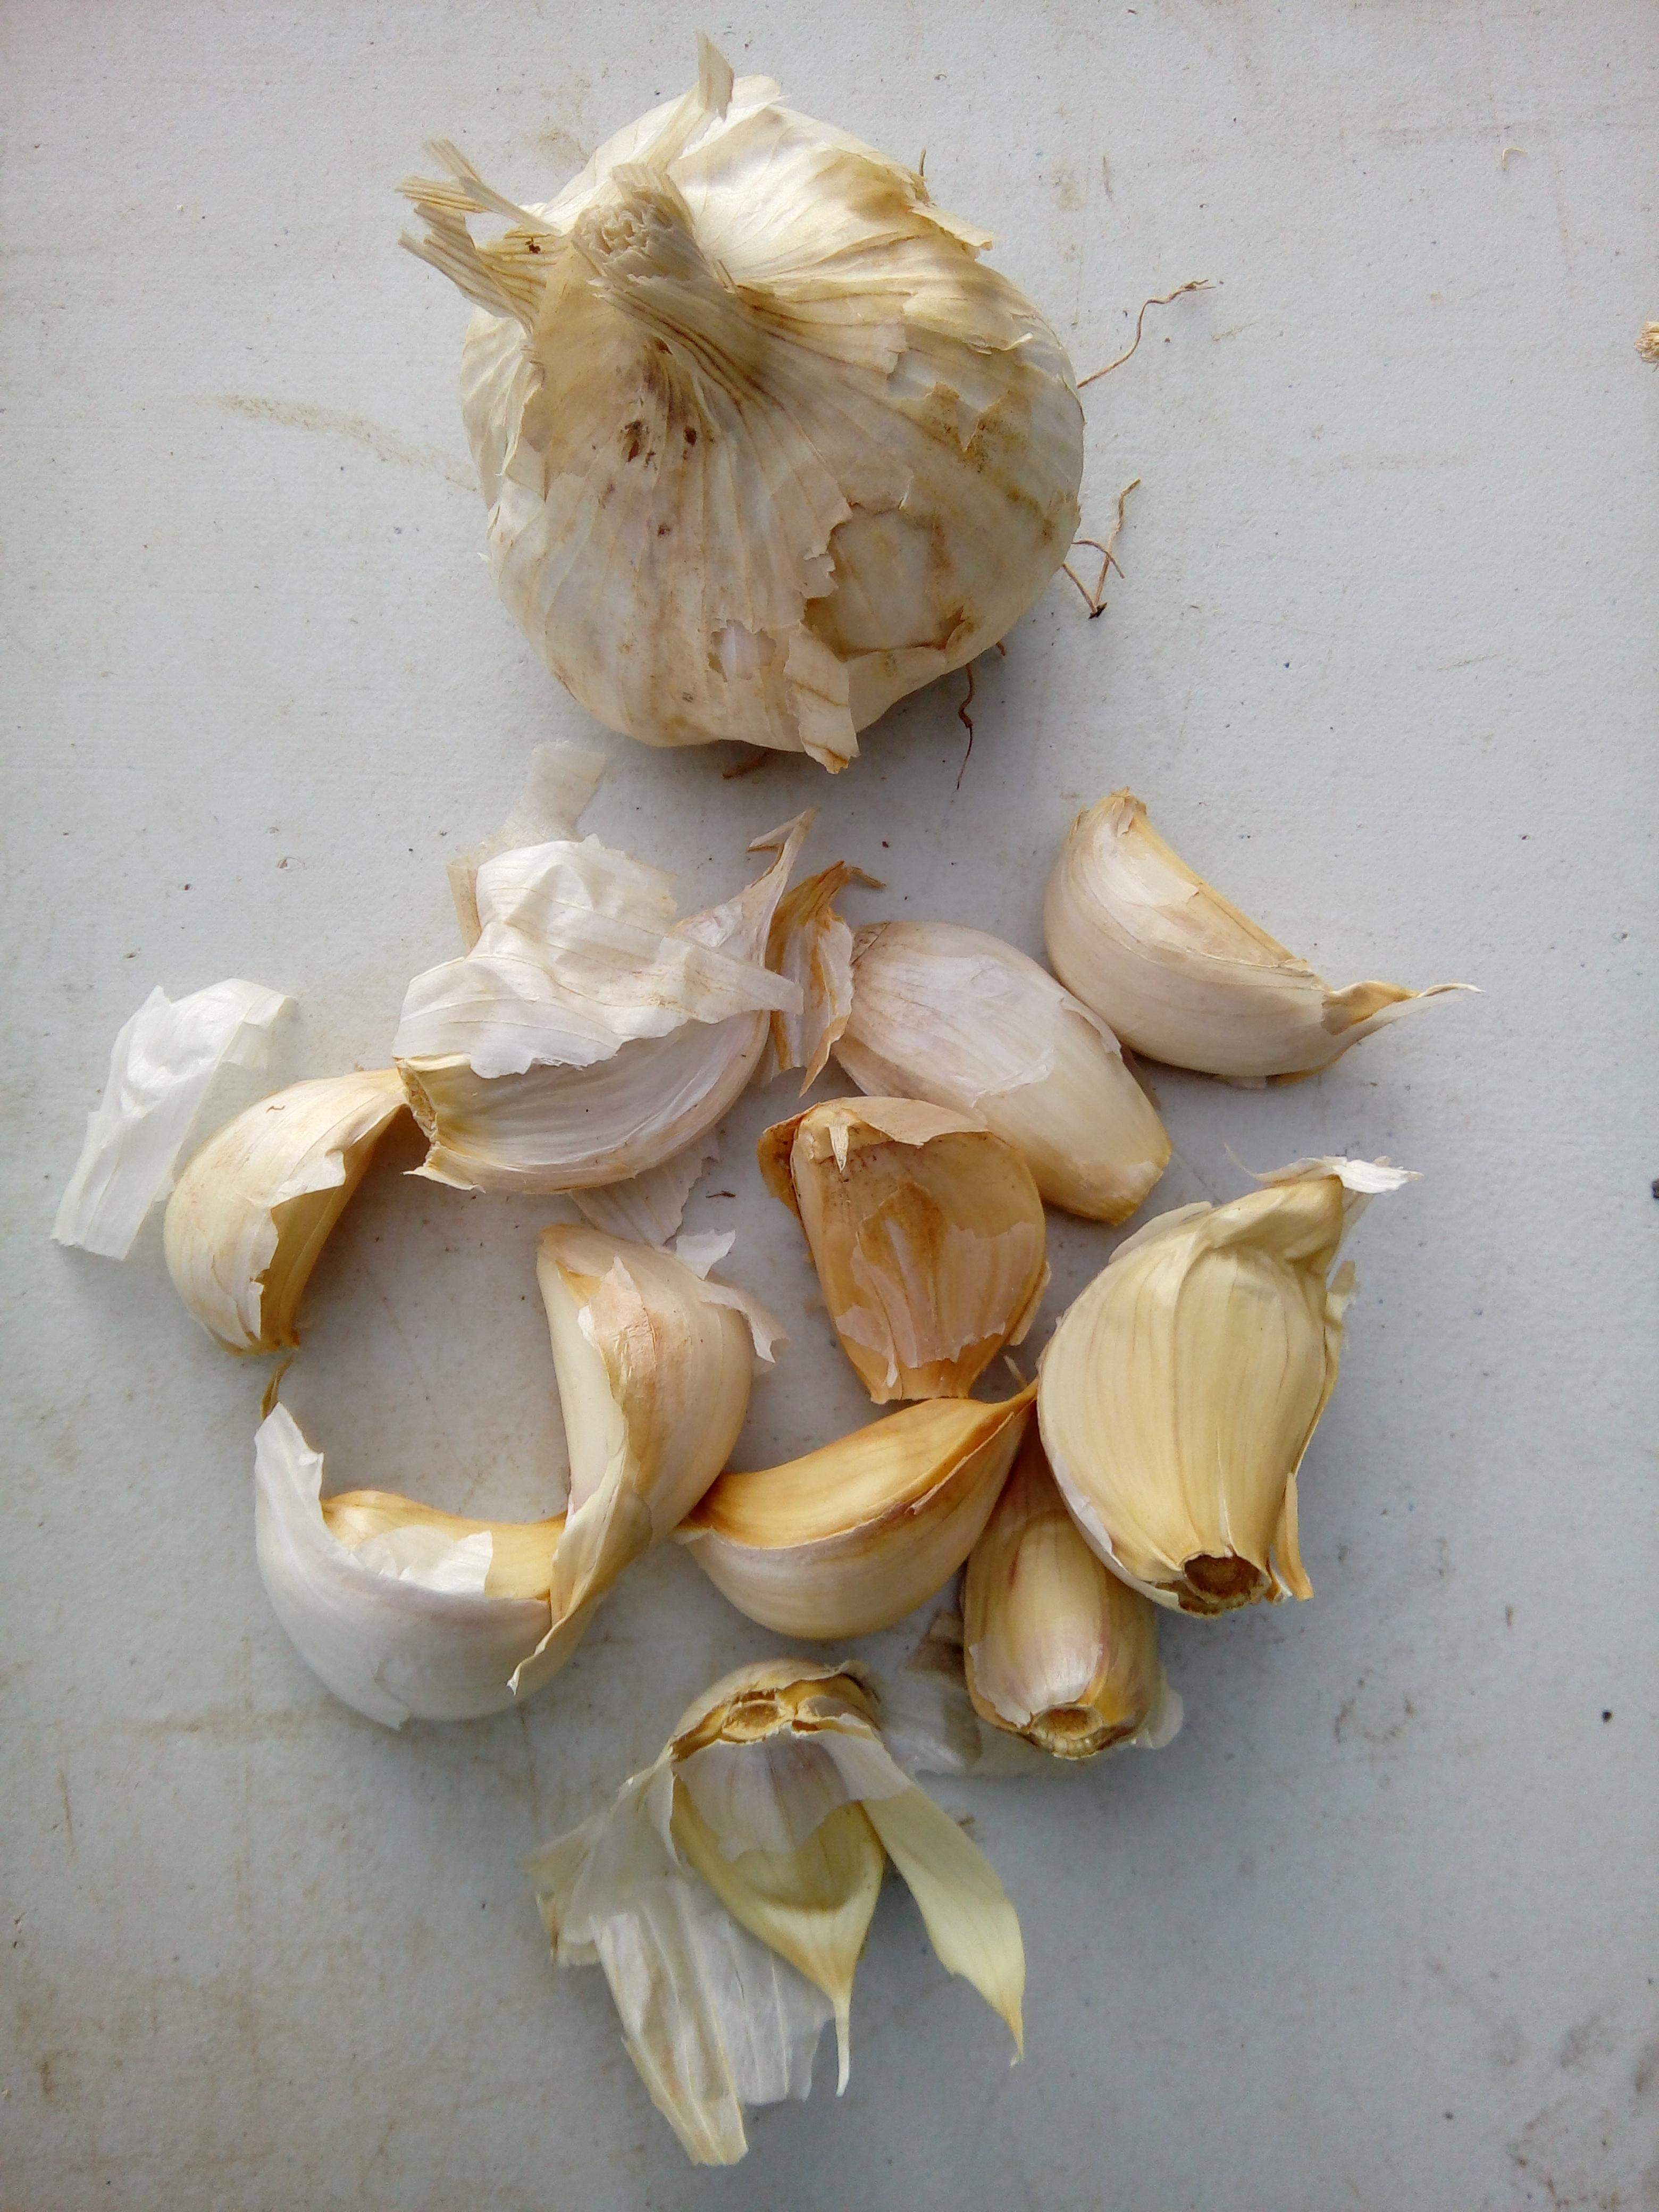 Planting Garlic -  Softneck garlic, ideal for plaits